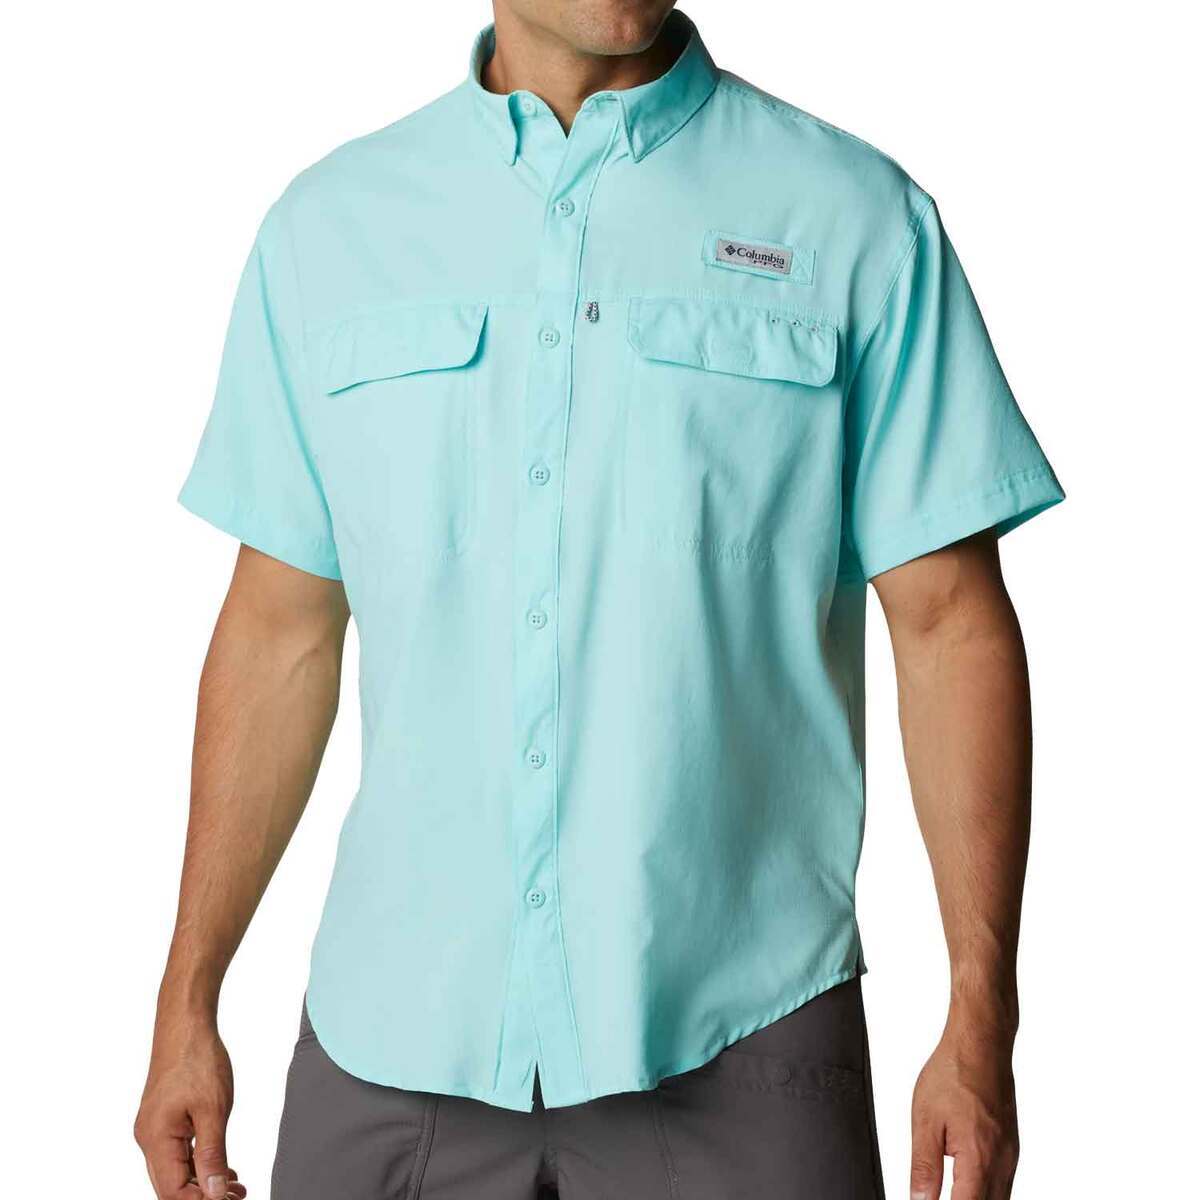 Columbia PFG Fishing Shirt, Size XS (6-7)